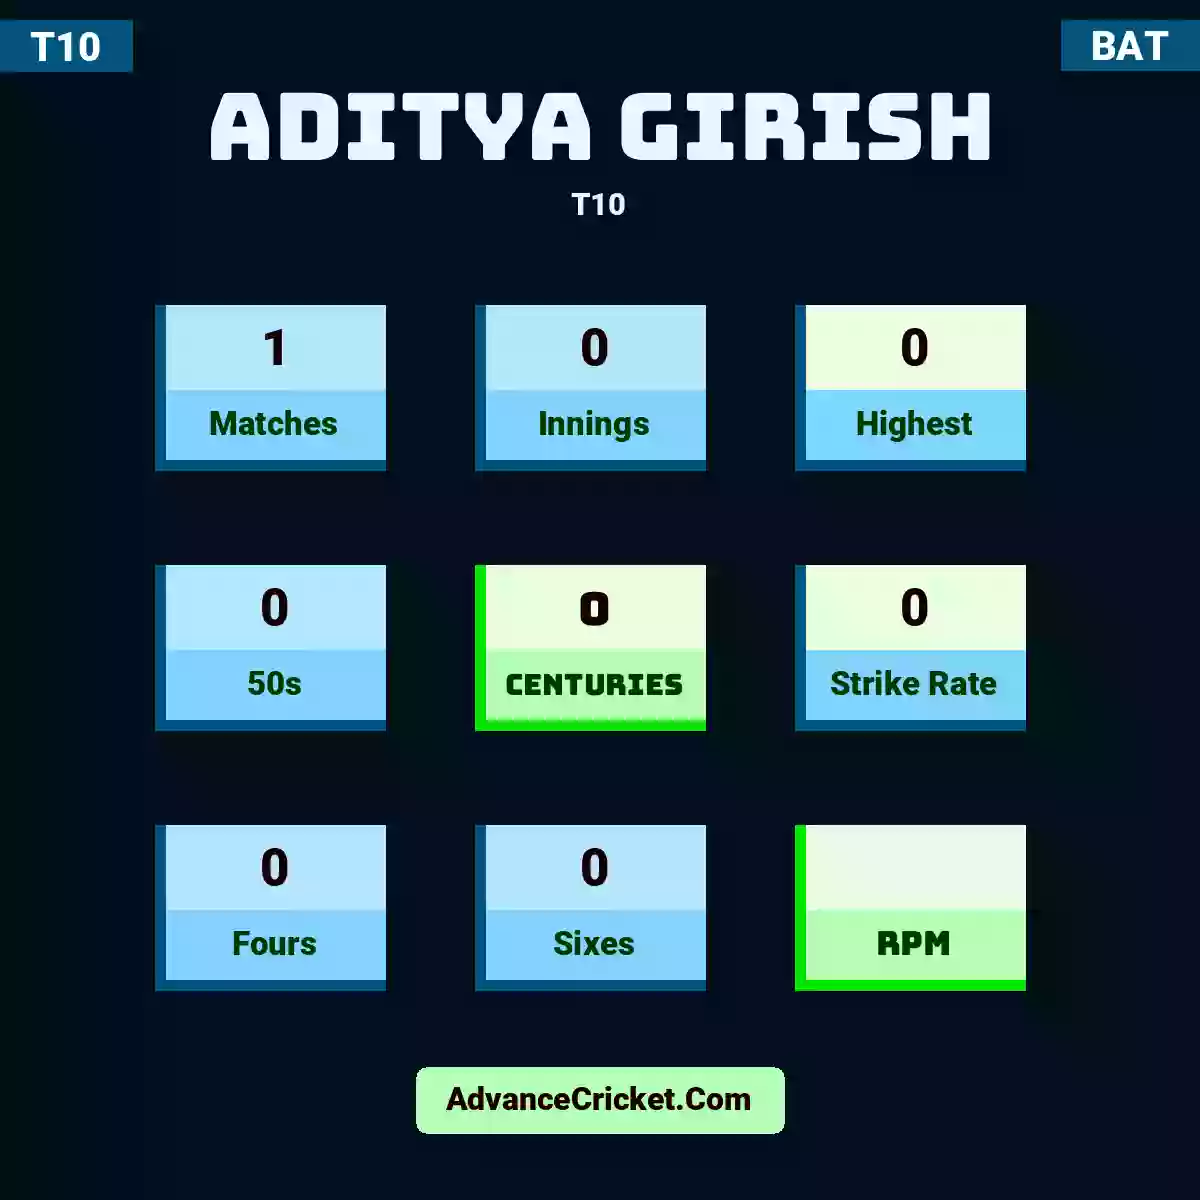 Aditya Girish T10 , Aditya Girish played 1 matches, scored 0 runs as highest, 0 half-centuries, and 0 centuries, with a strike rate of 0. A.Girish hit 0 fours and 0 sixes.